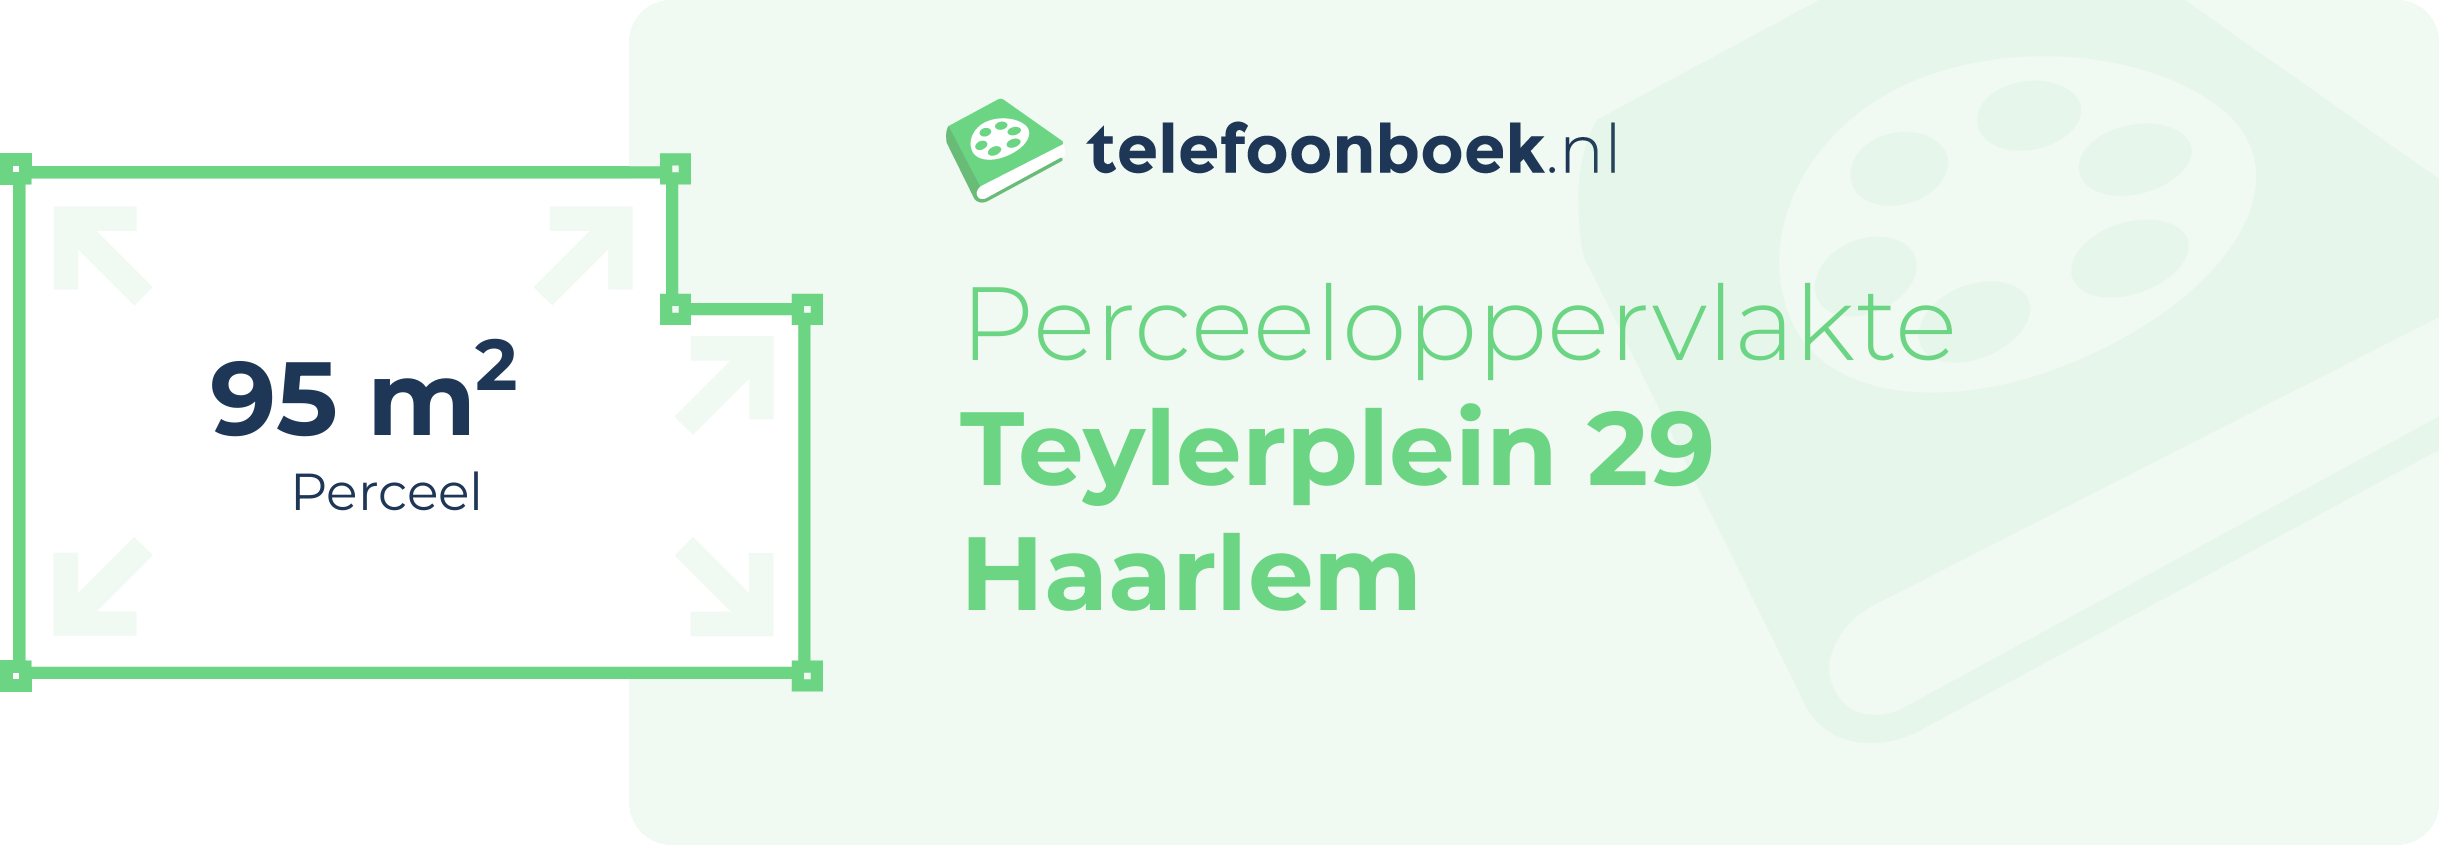 Perceeloppervlakte Teylerplein 29 Haarlem